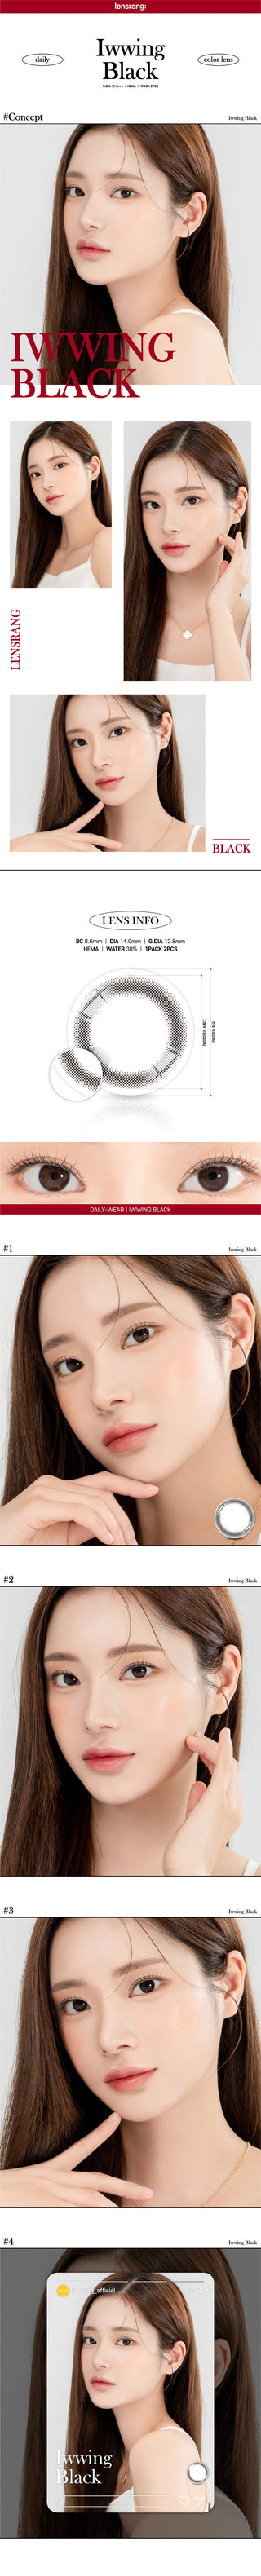 Lensrang Iwwing Black Color Contact Lens - EyeCandys